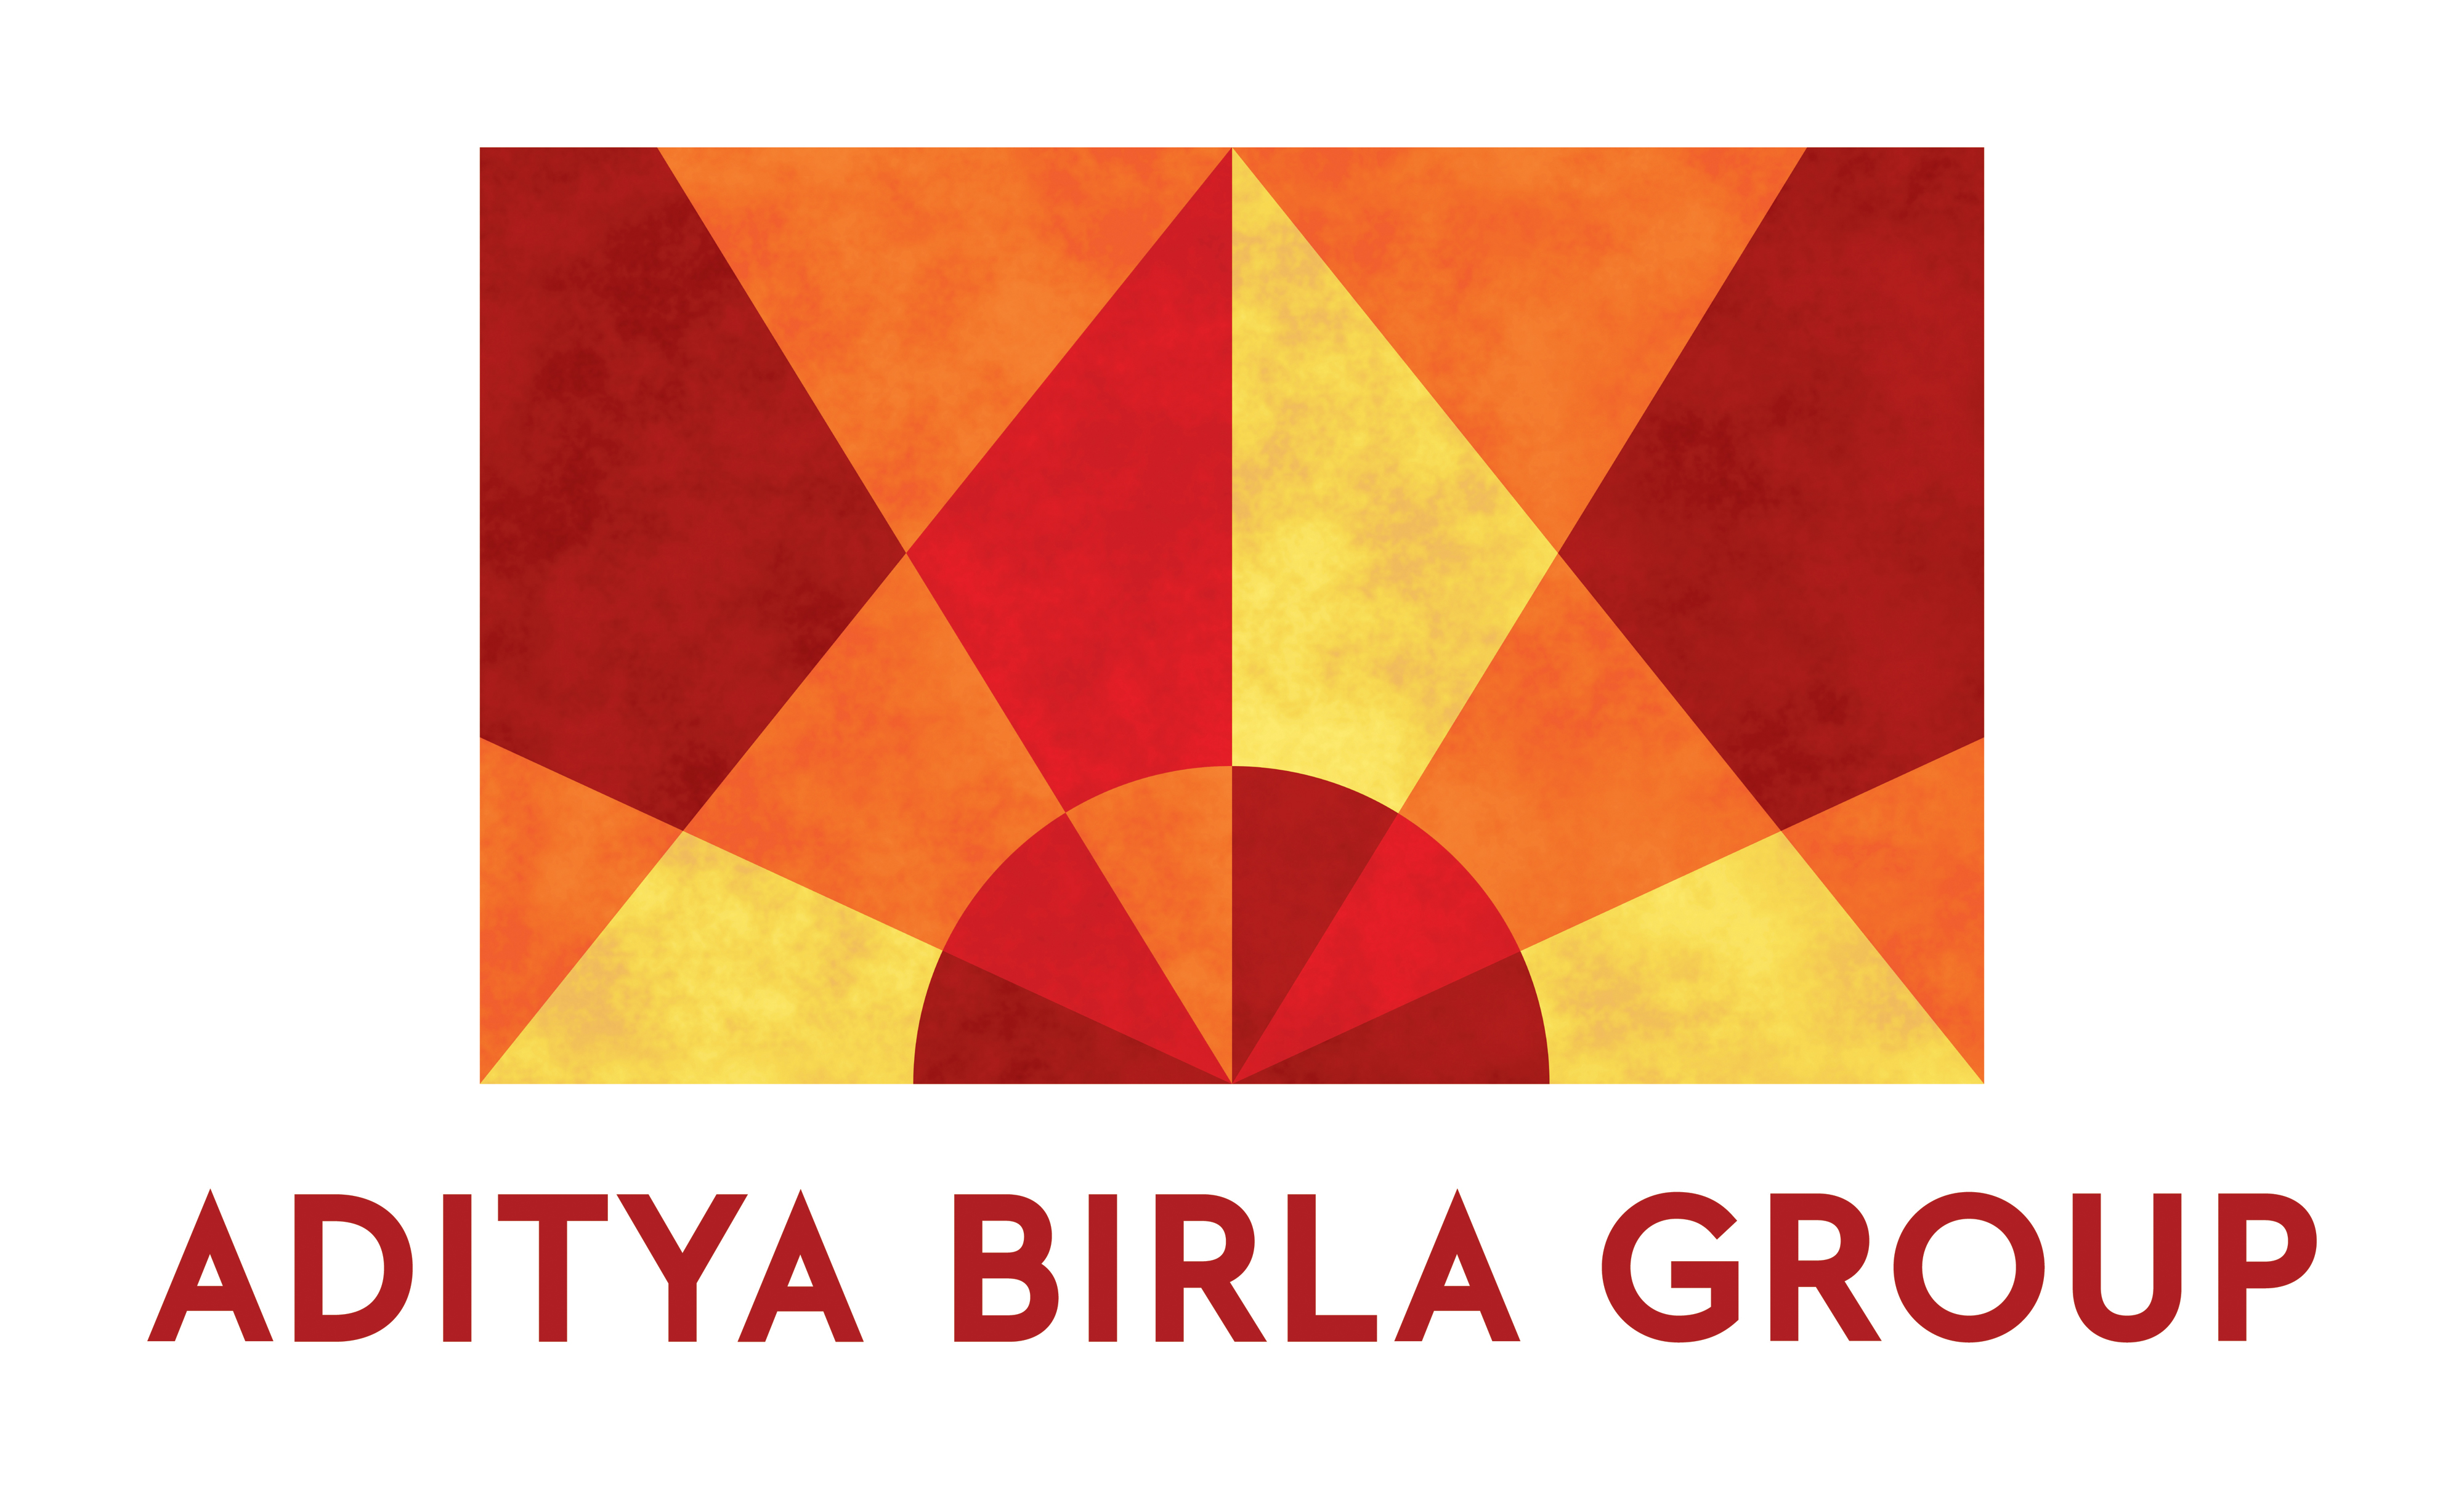 Aditiya birla group